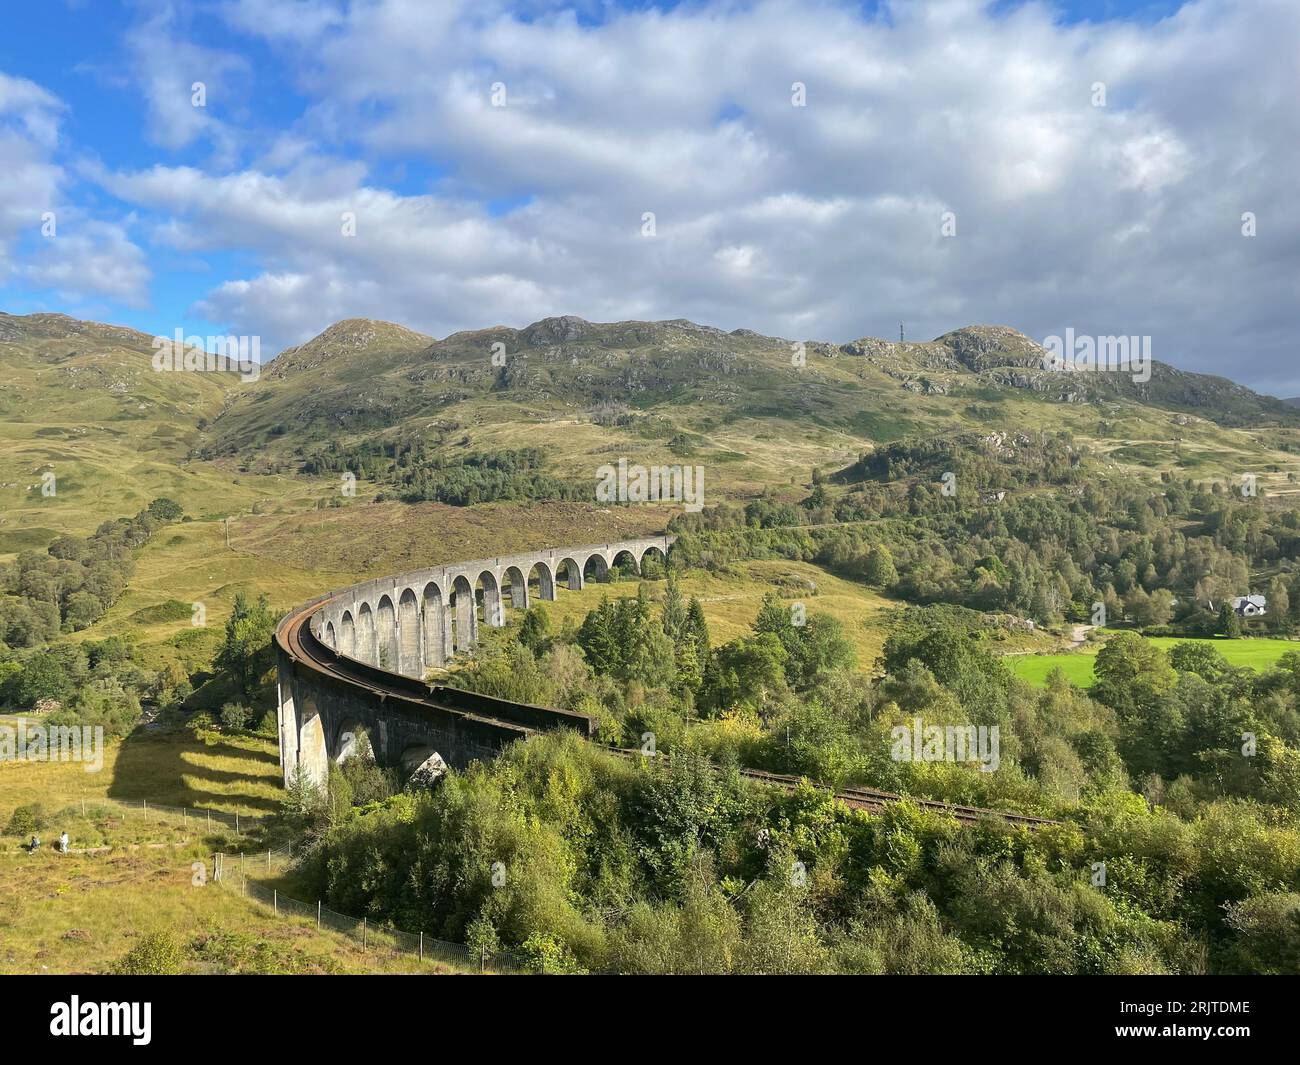 A scenic view of a bridge with lush green grass surrounding it: Scotland, Glenfinnan Viaduct Stock Photo